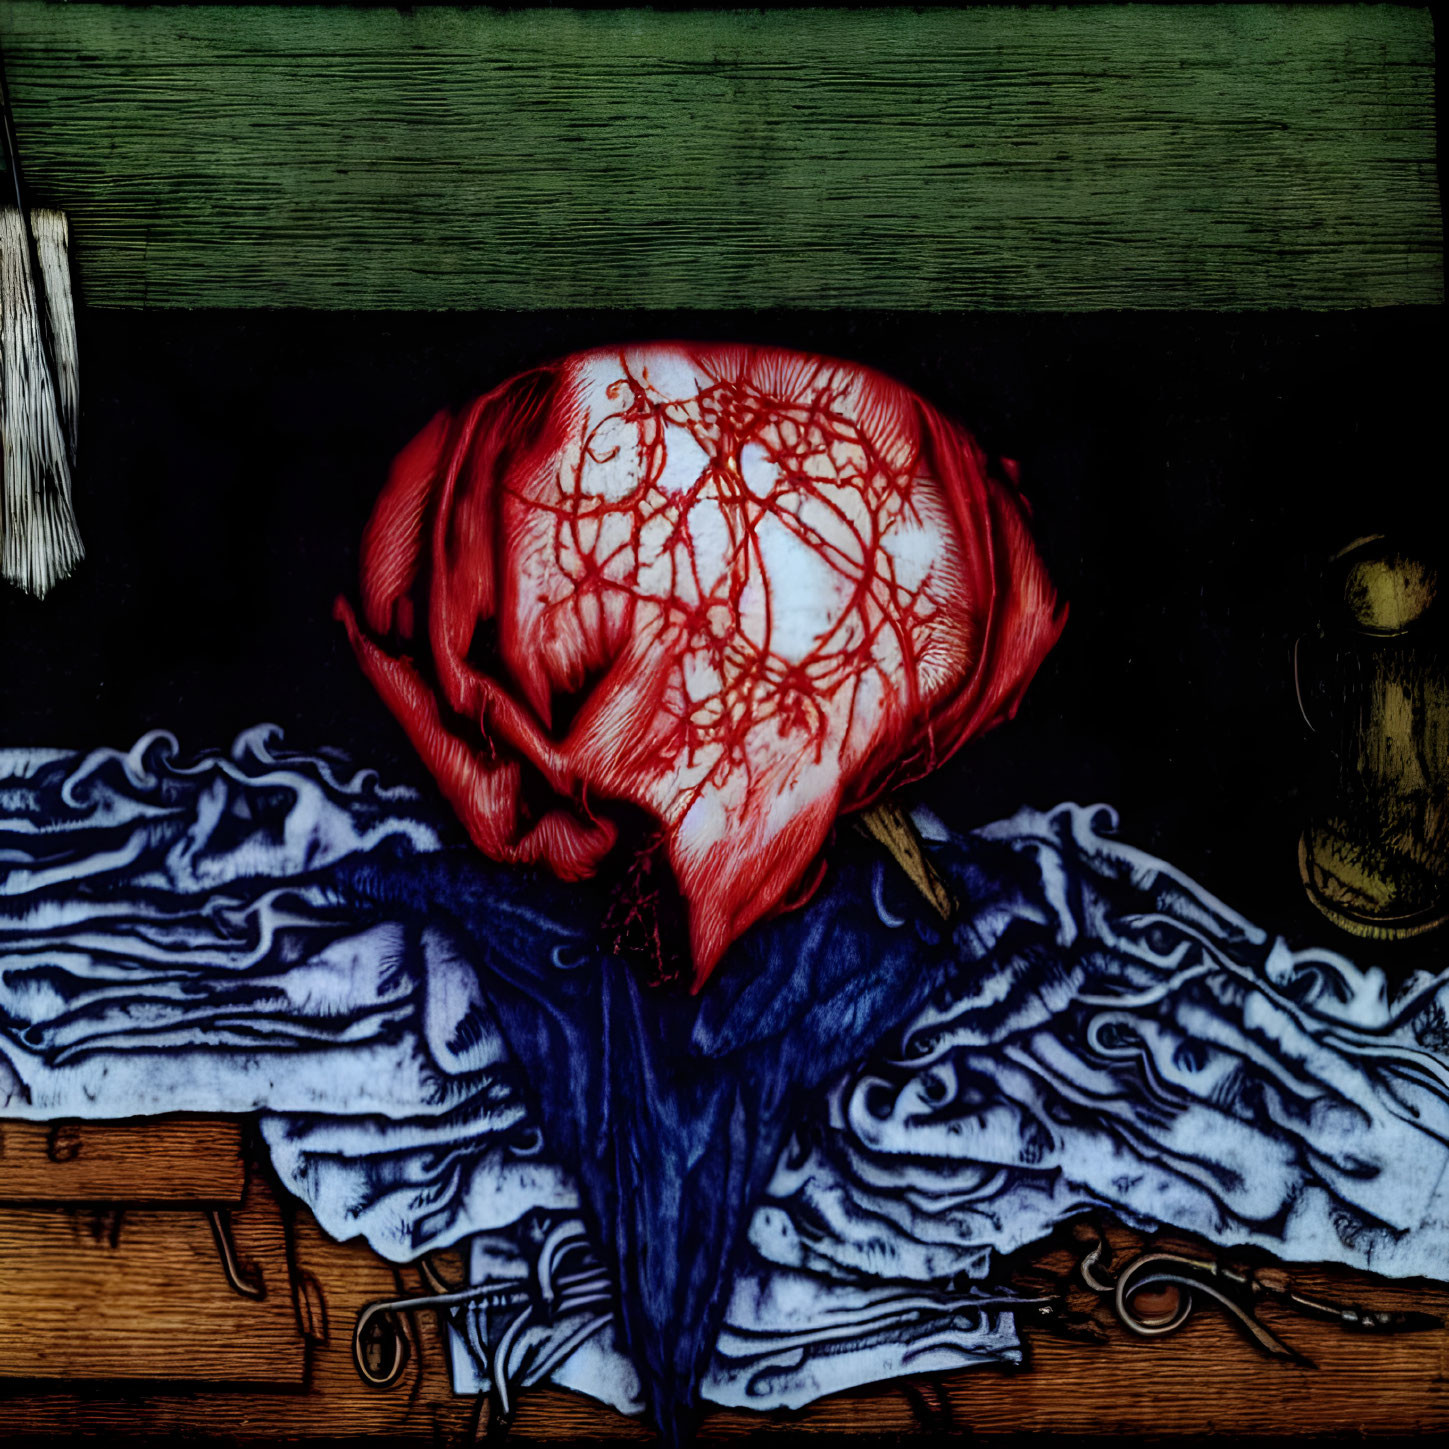 Detailed anatomical heart illustration on textured blue background